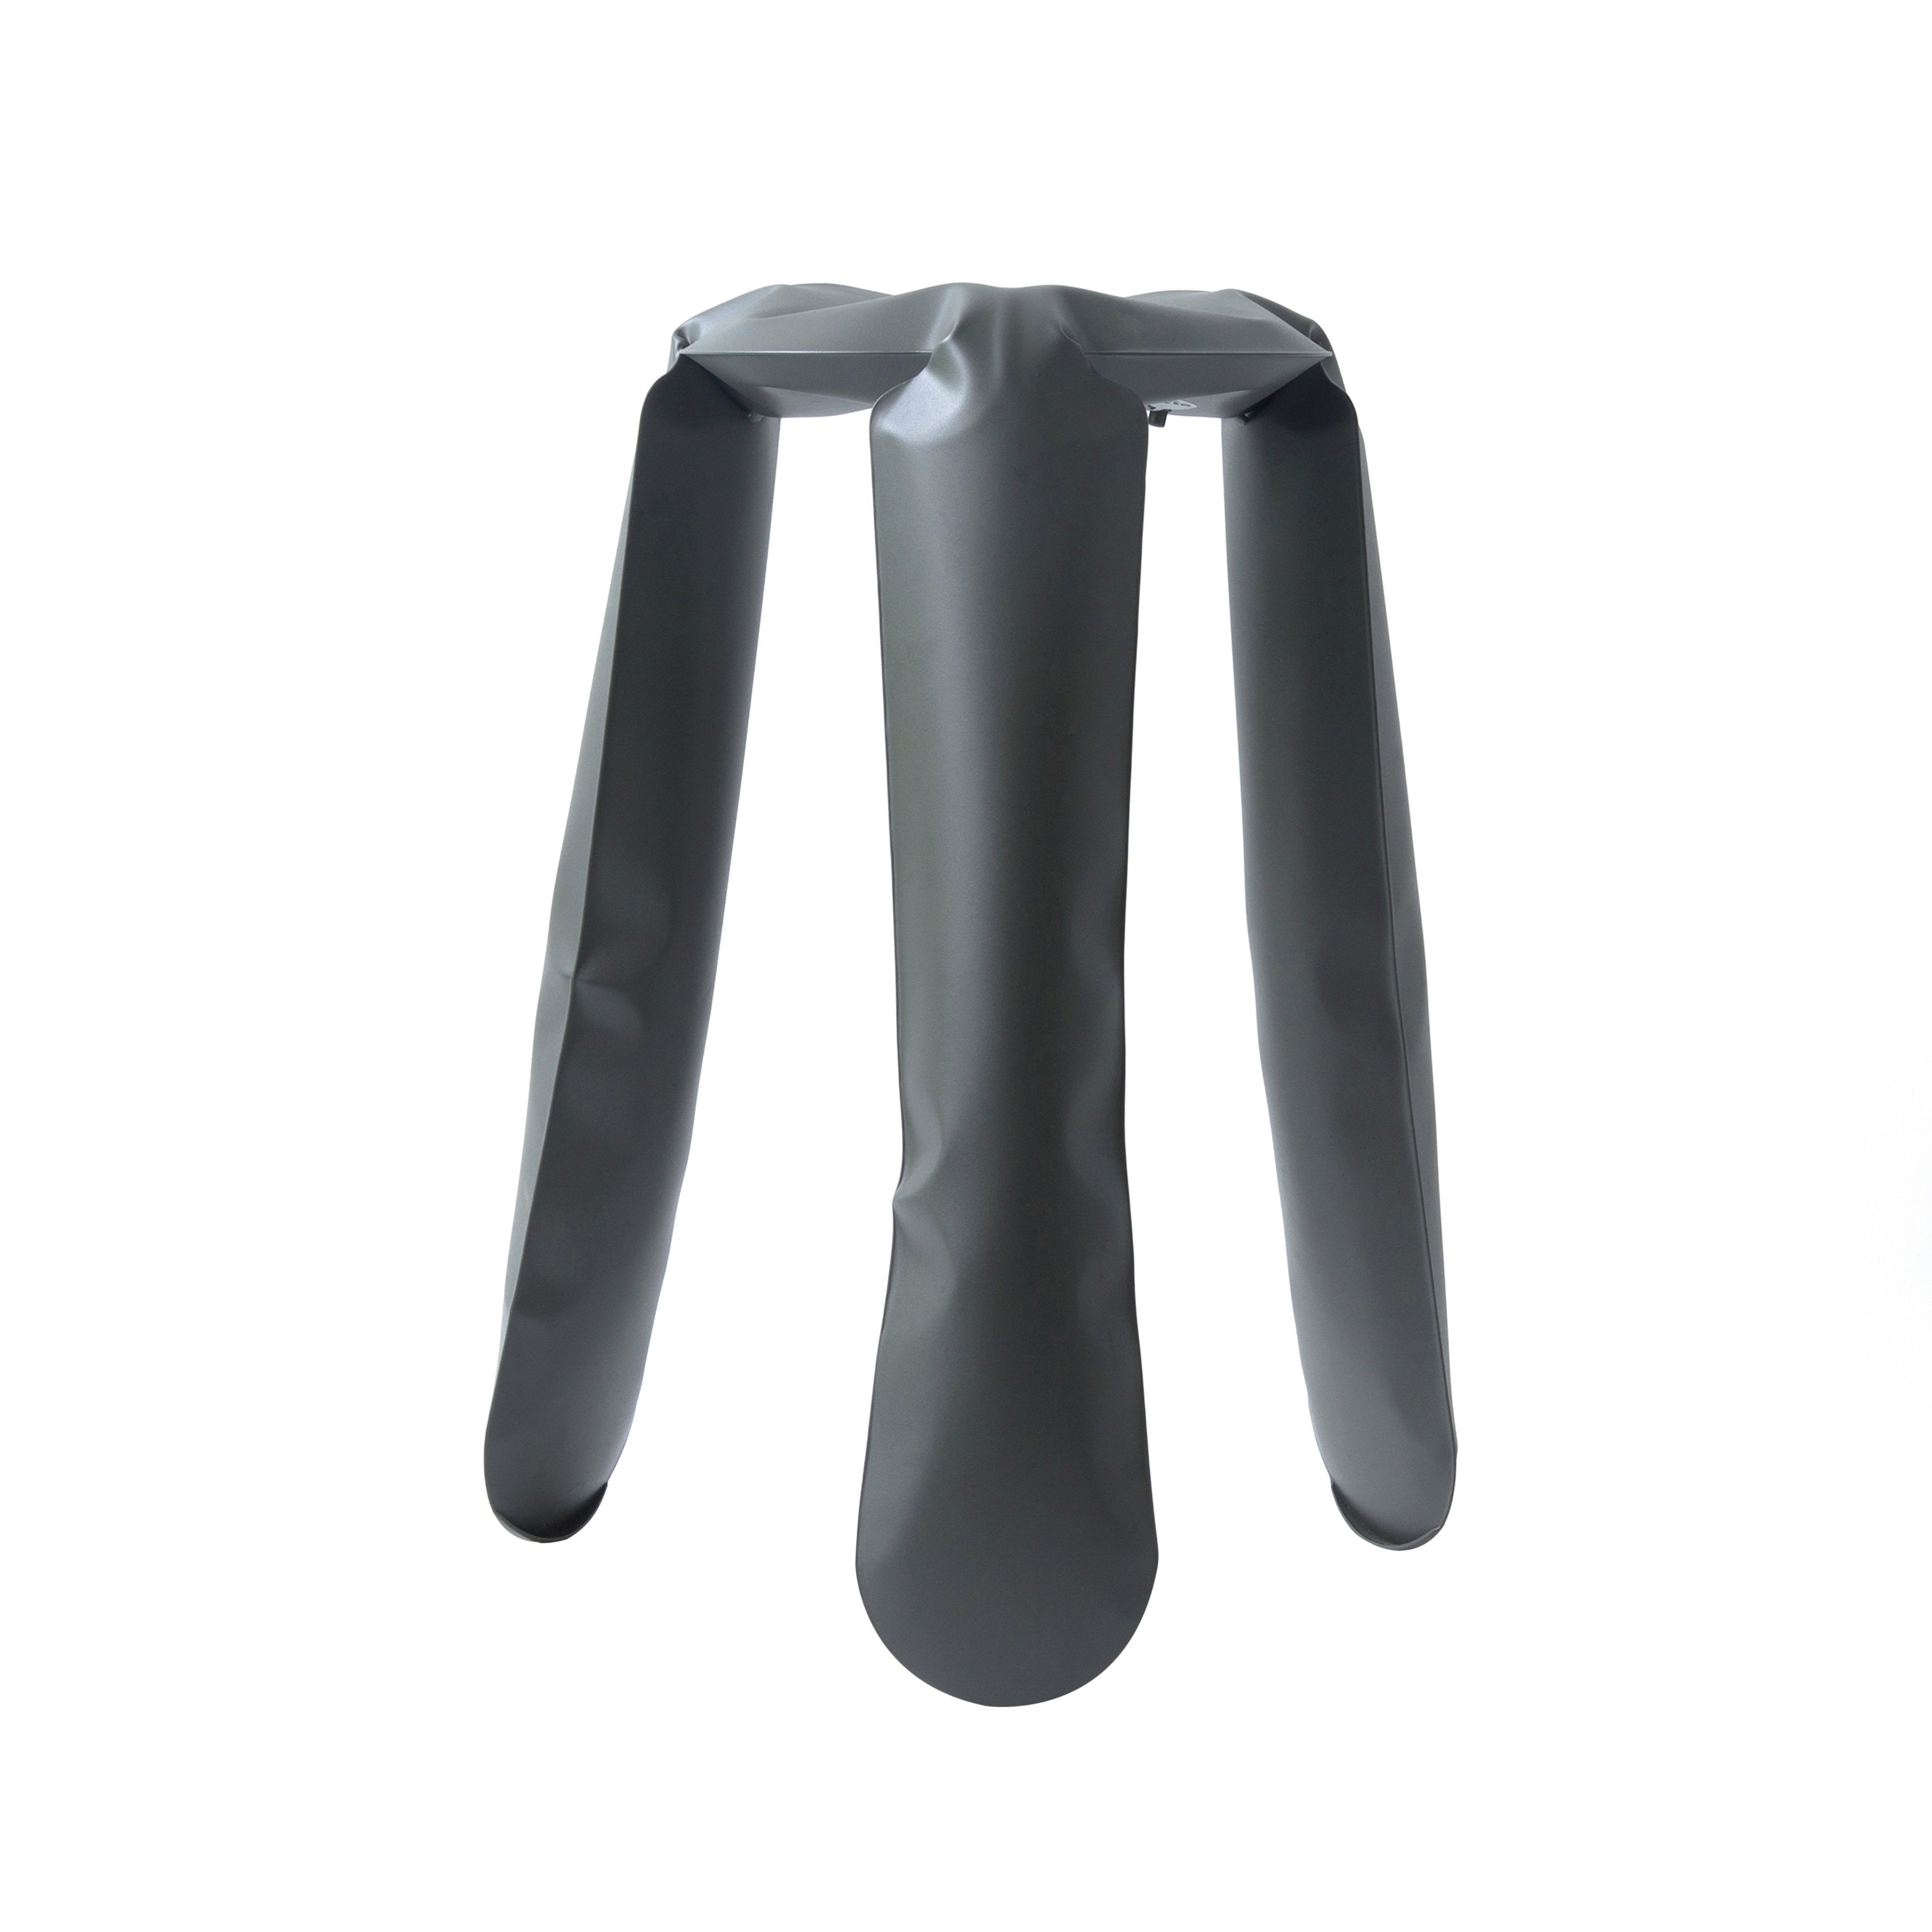 Plopp Kitchen Stool: Umbra Grey + Carbon Steel